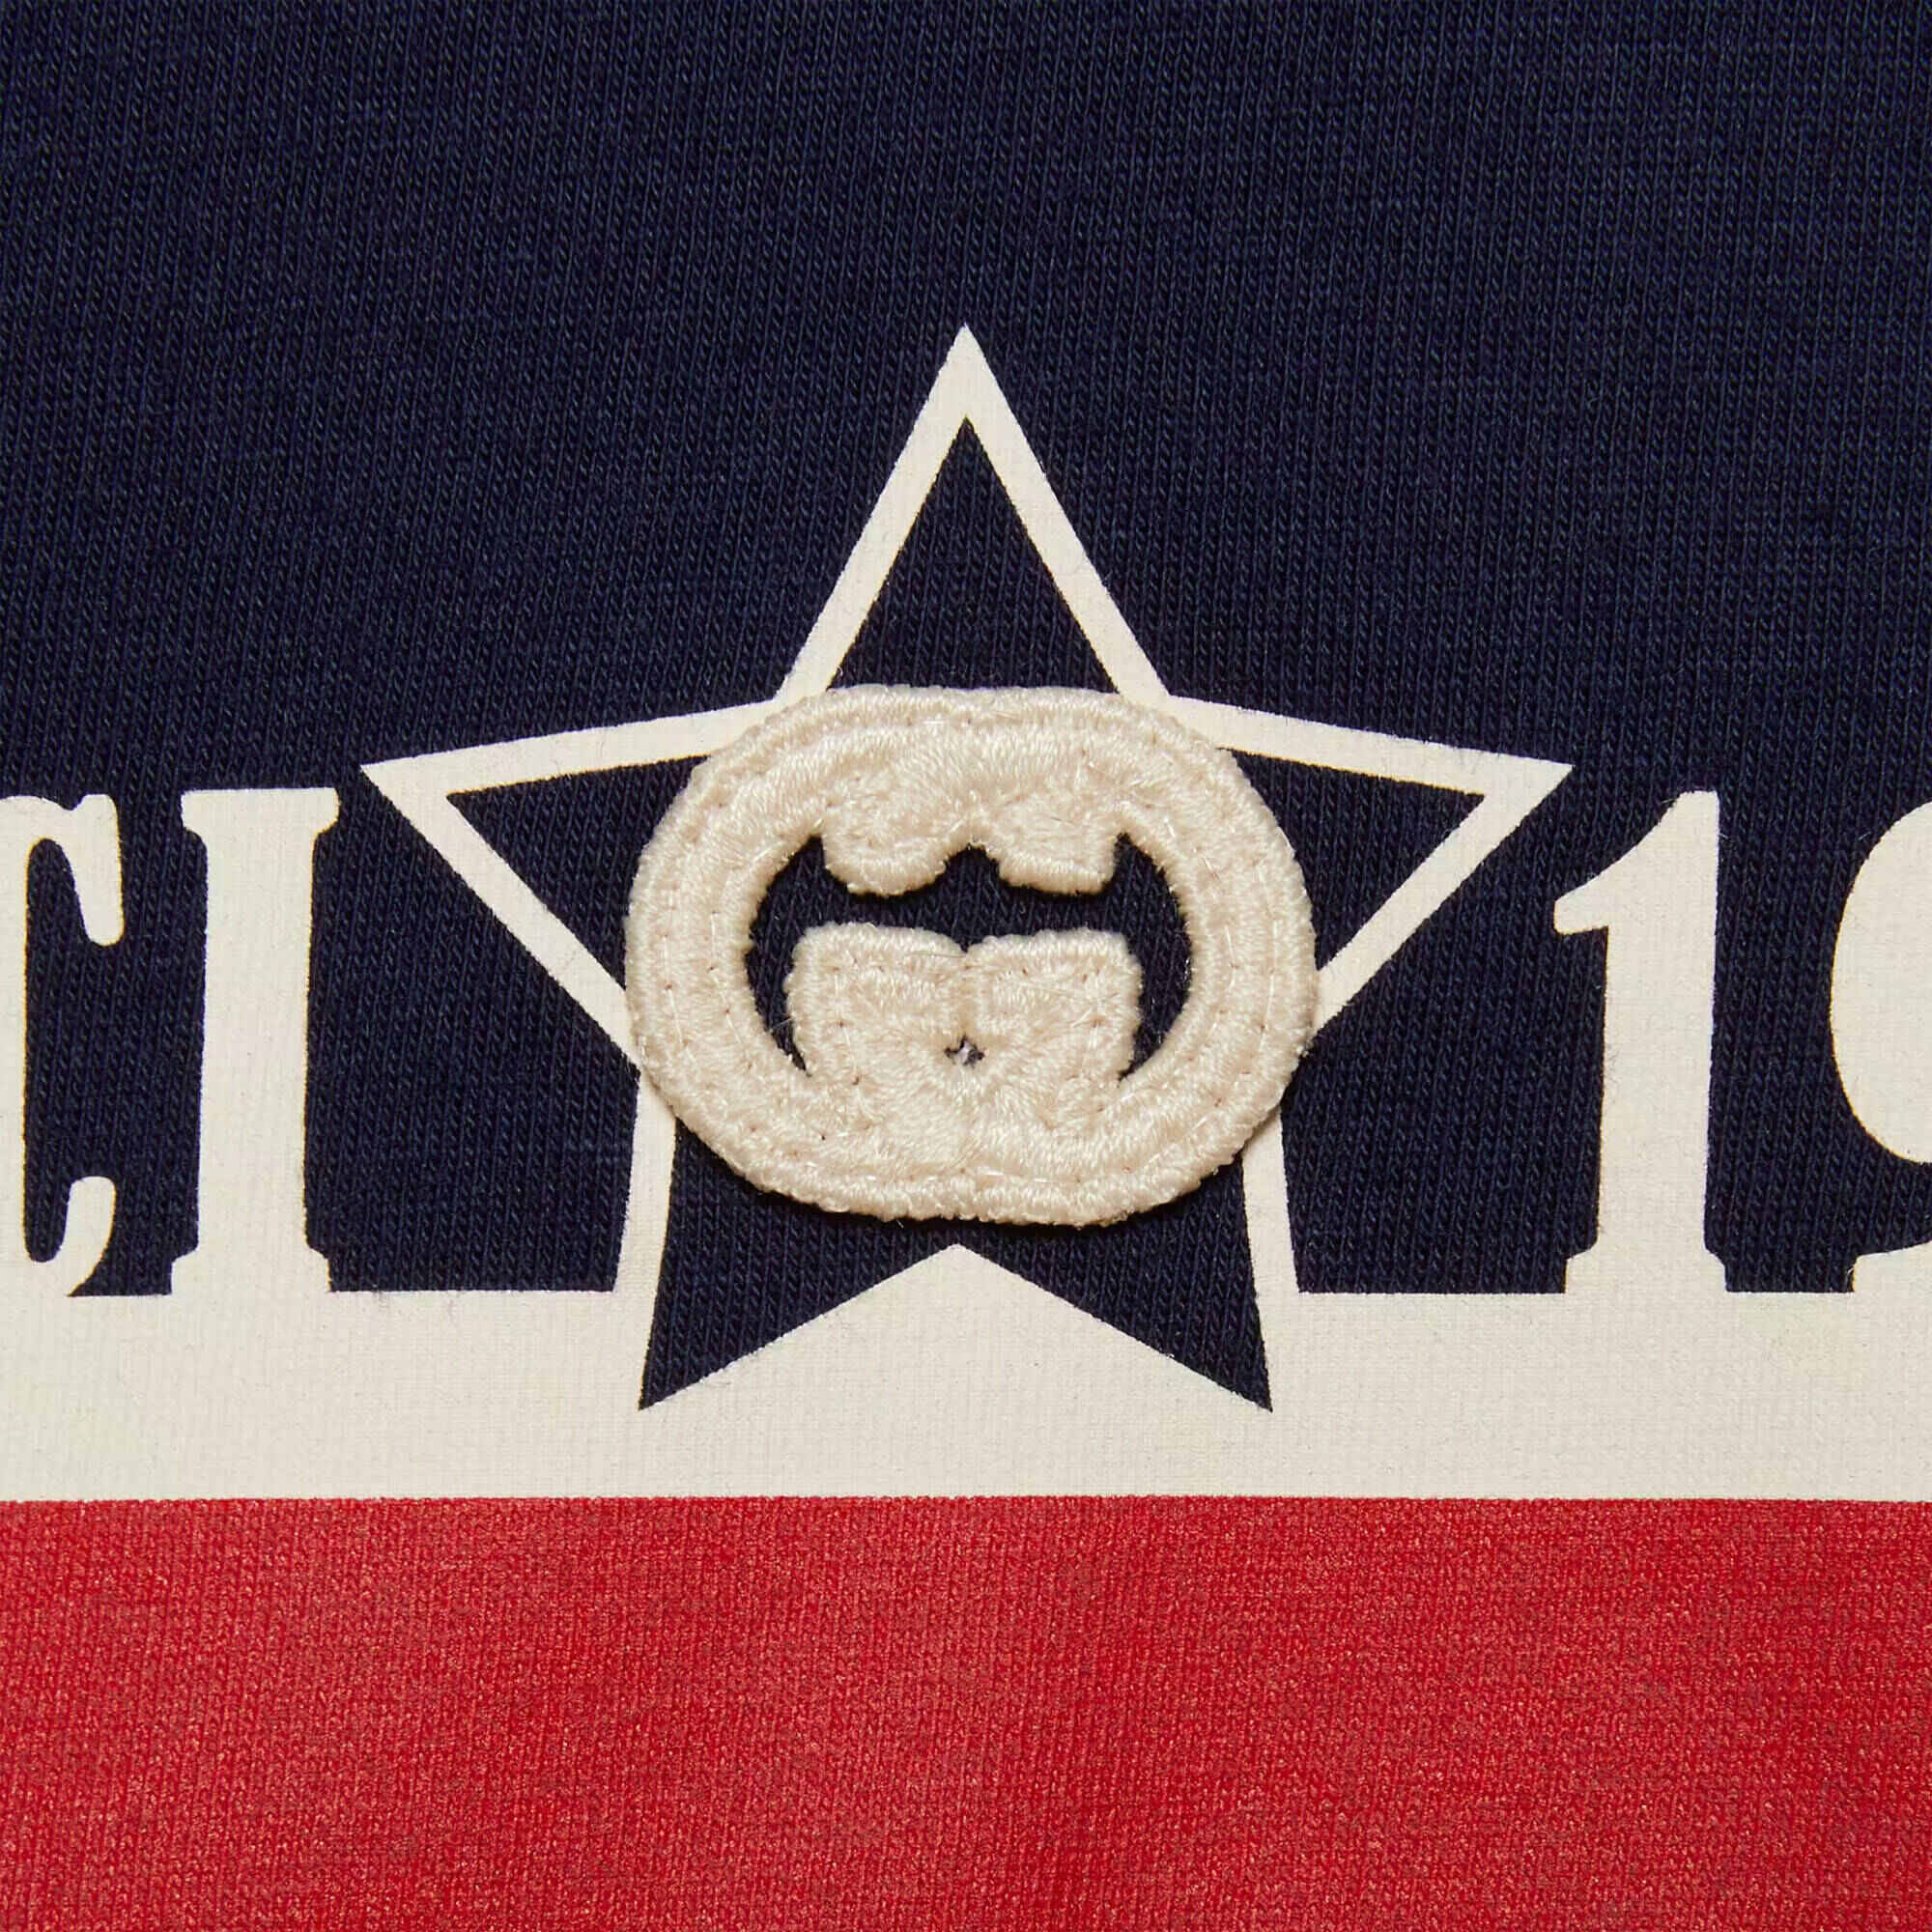 Baby Boys Navy Logo Cotton T-Shirt